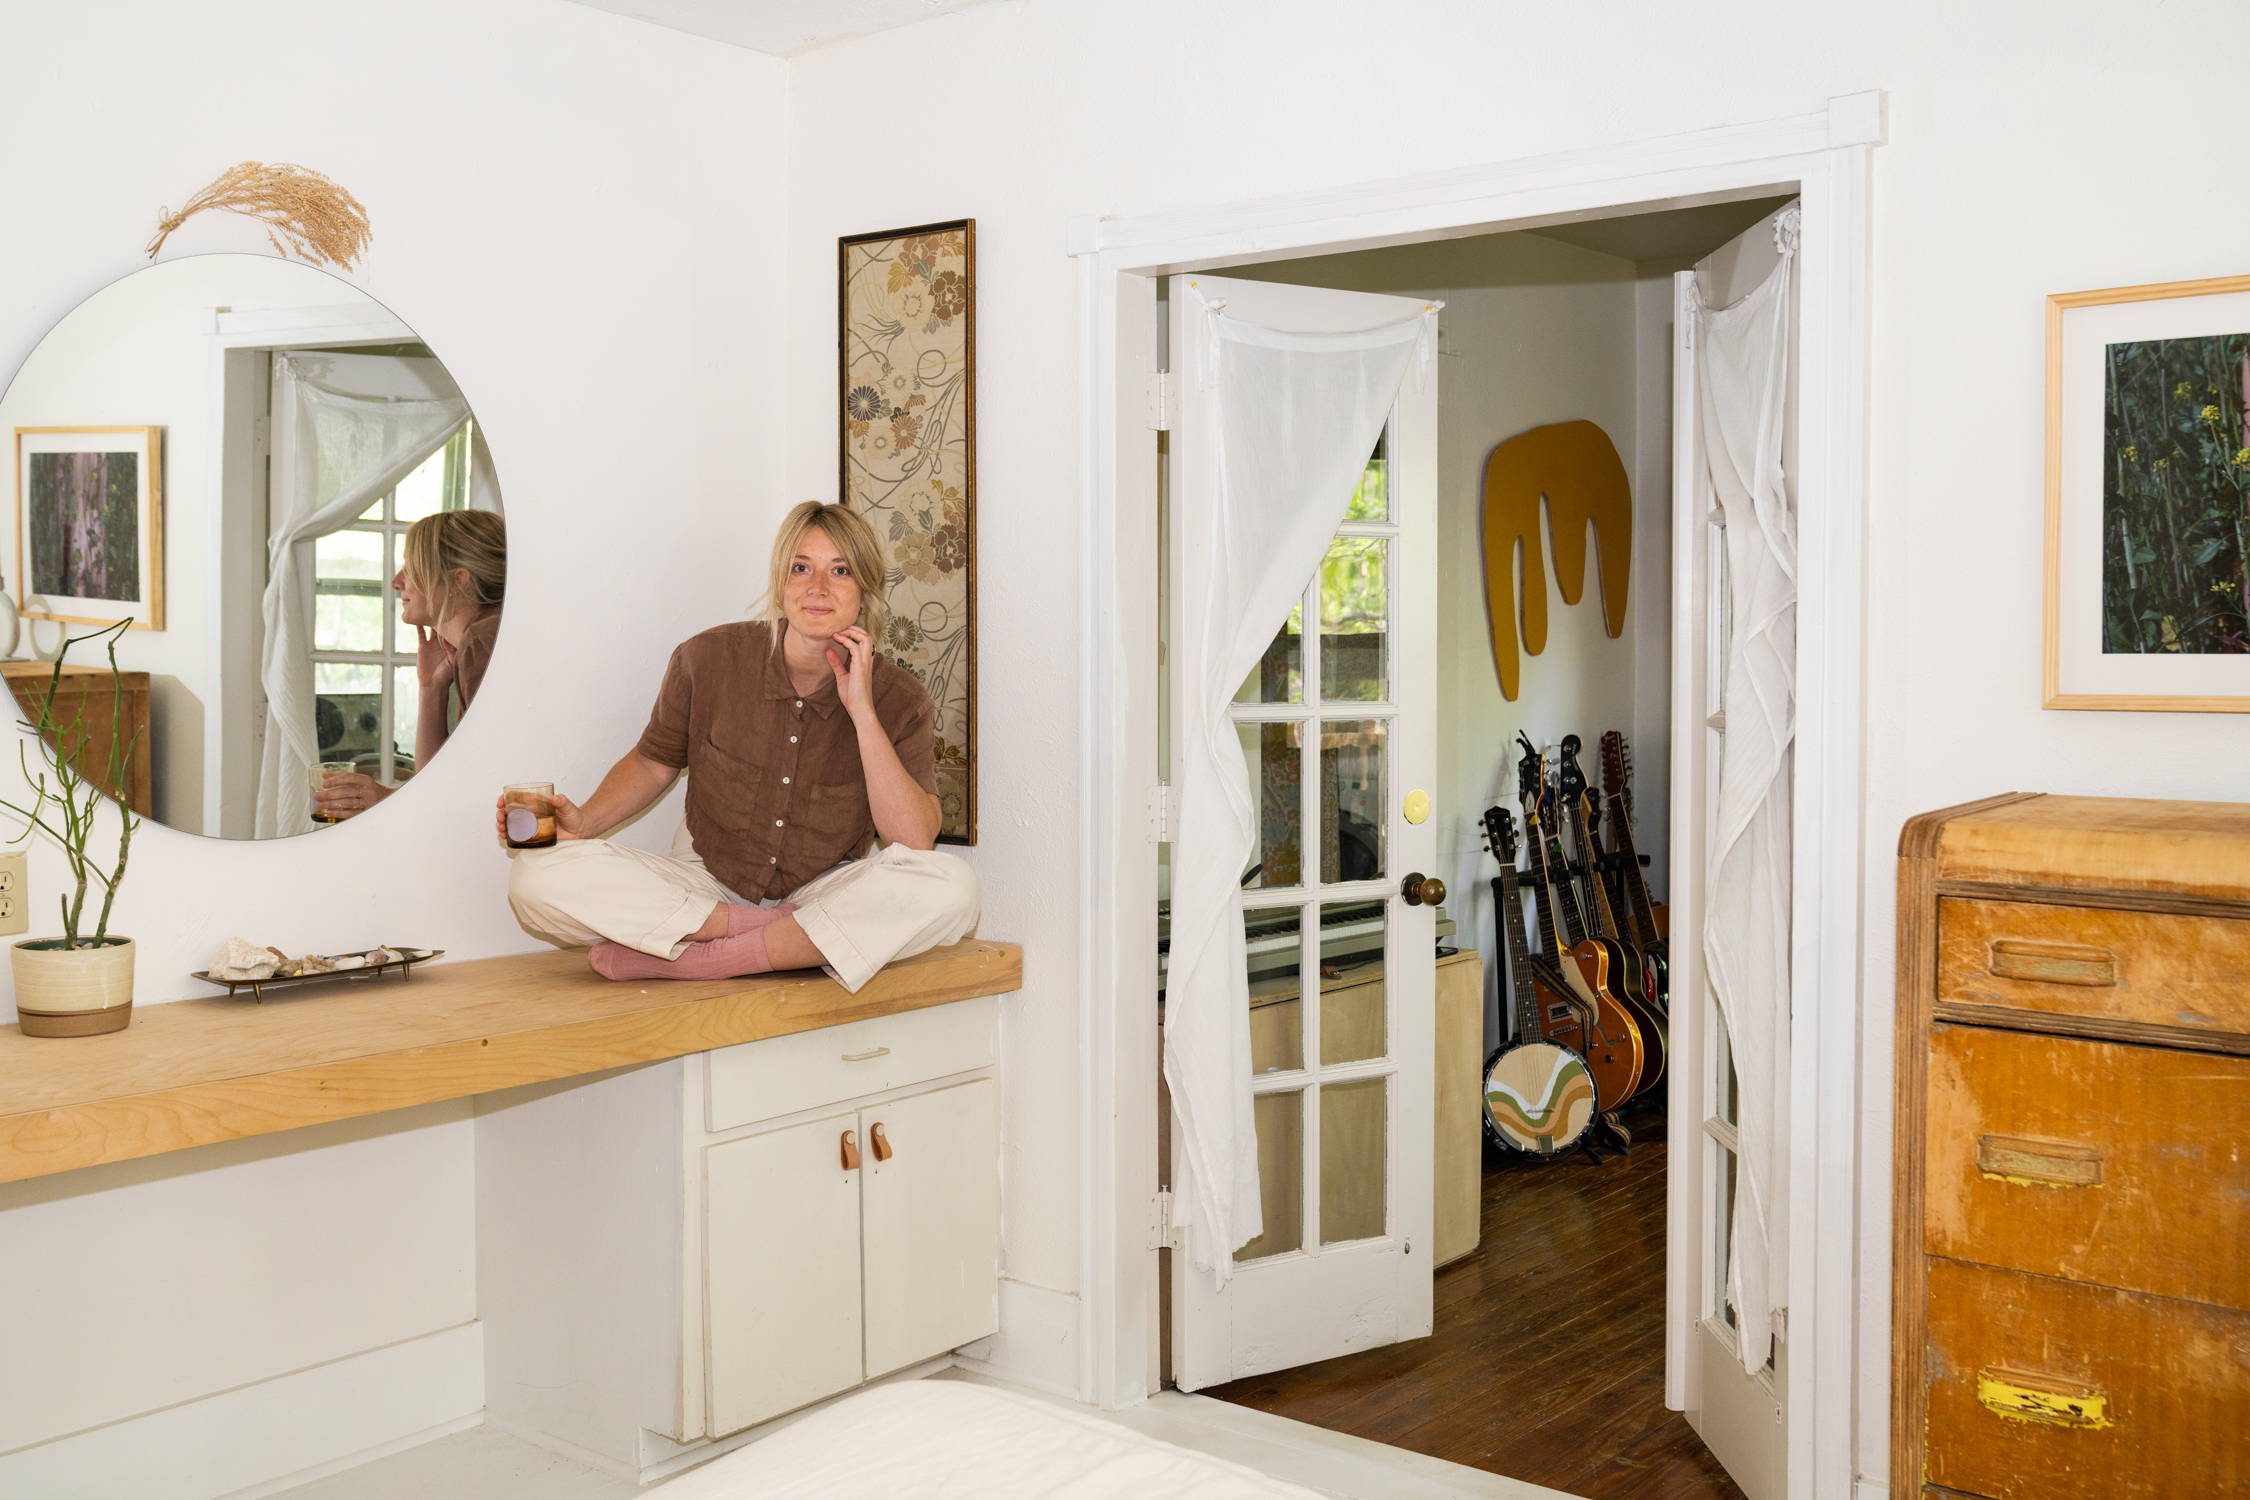 O’Connor in bedroom with circle mirror, wood platform vanity and breezy doorway